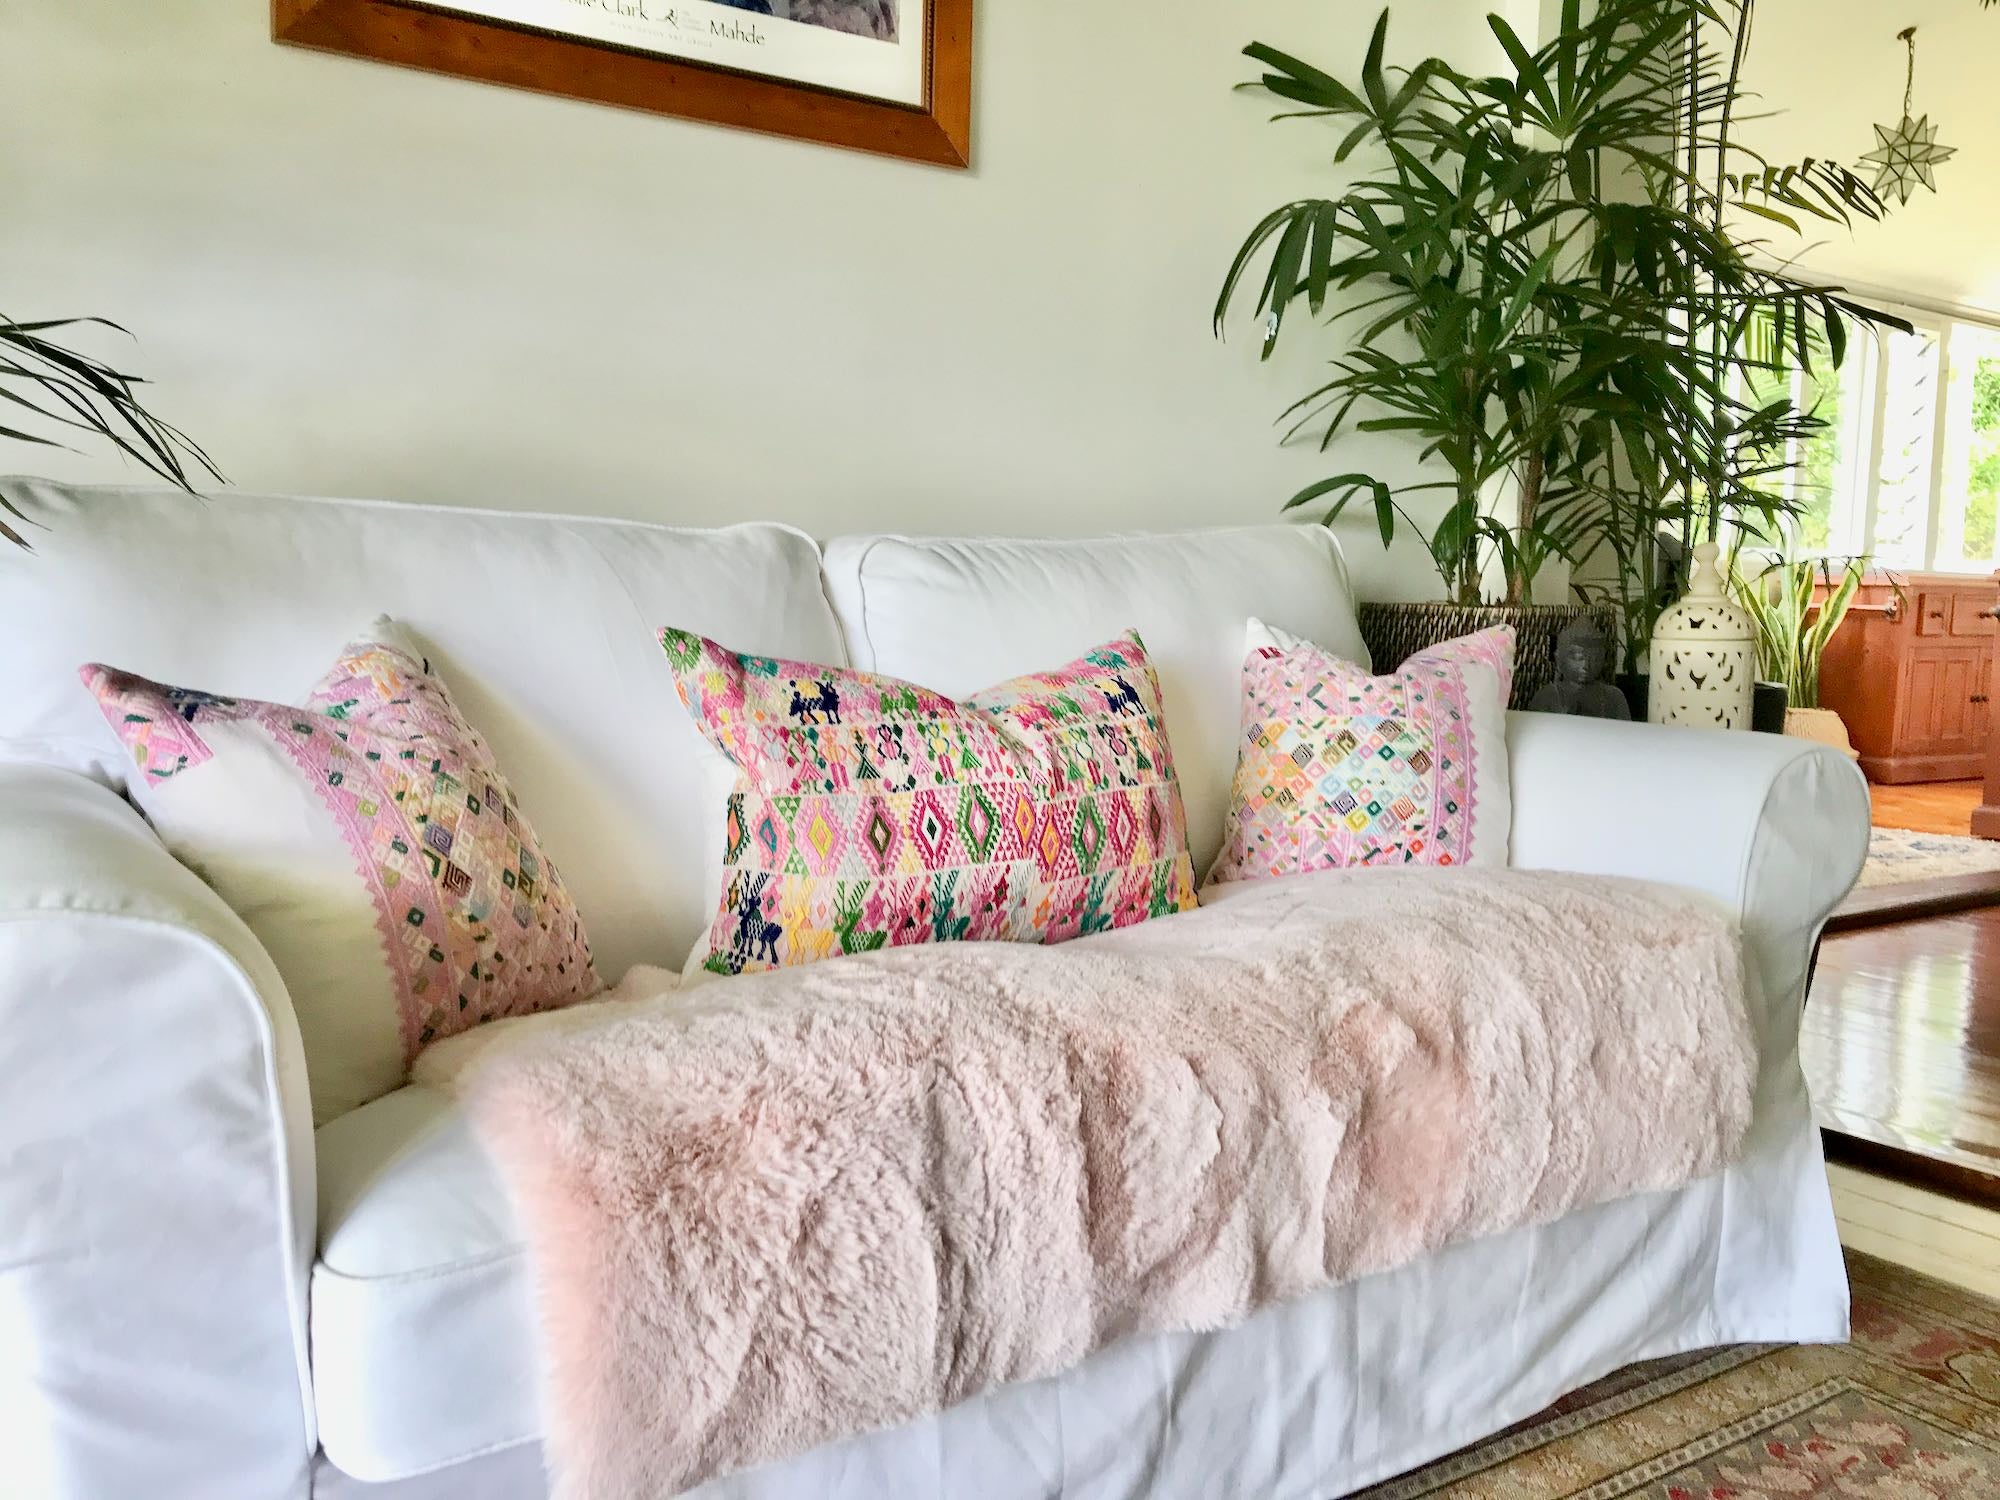 Guatemalan Huipil Pillow, vintage, hand woven colourful pastel lumbar cushion from Coban